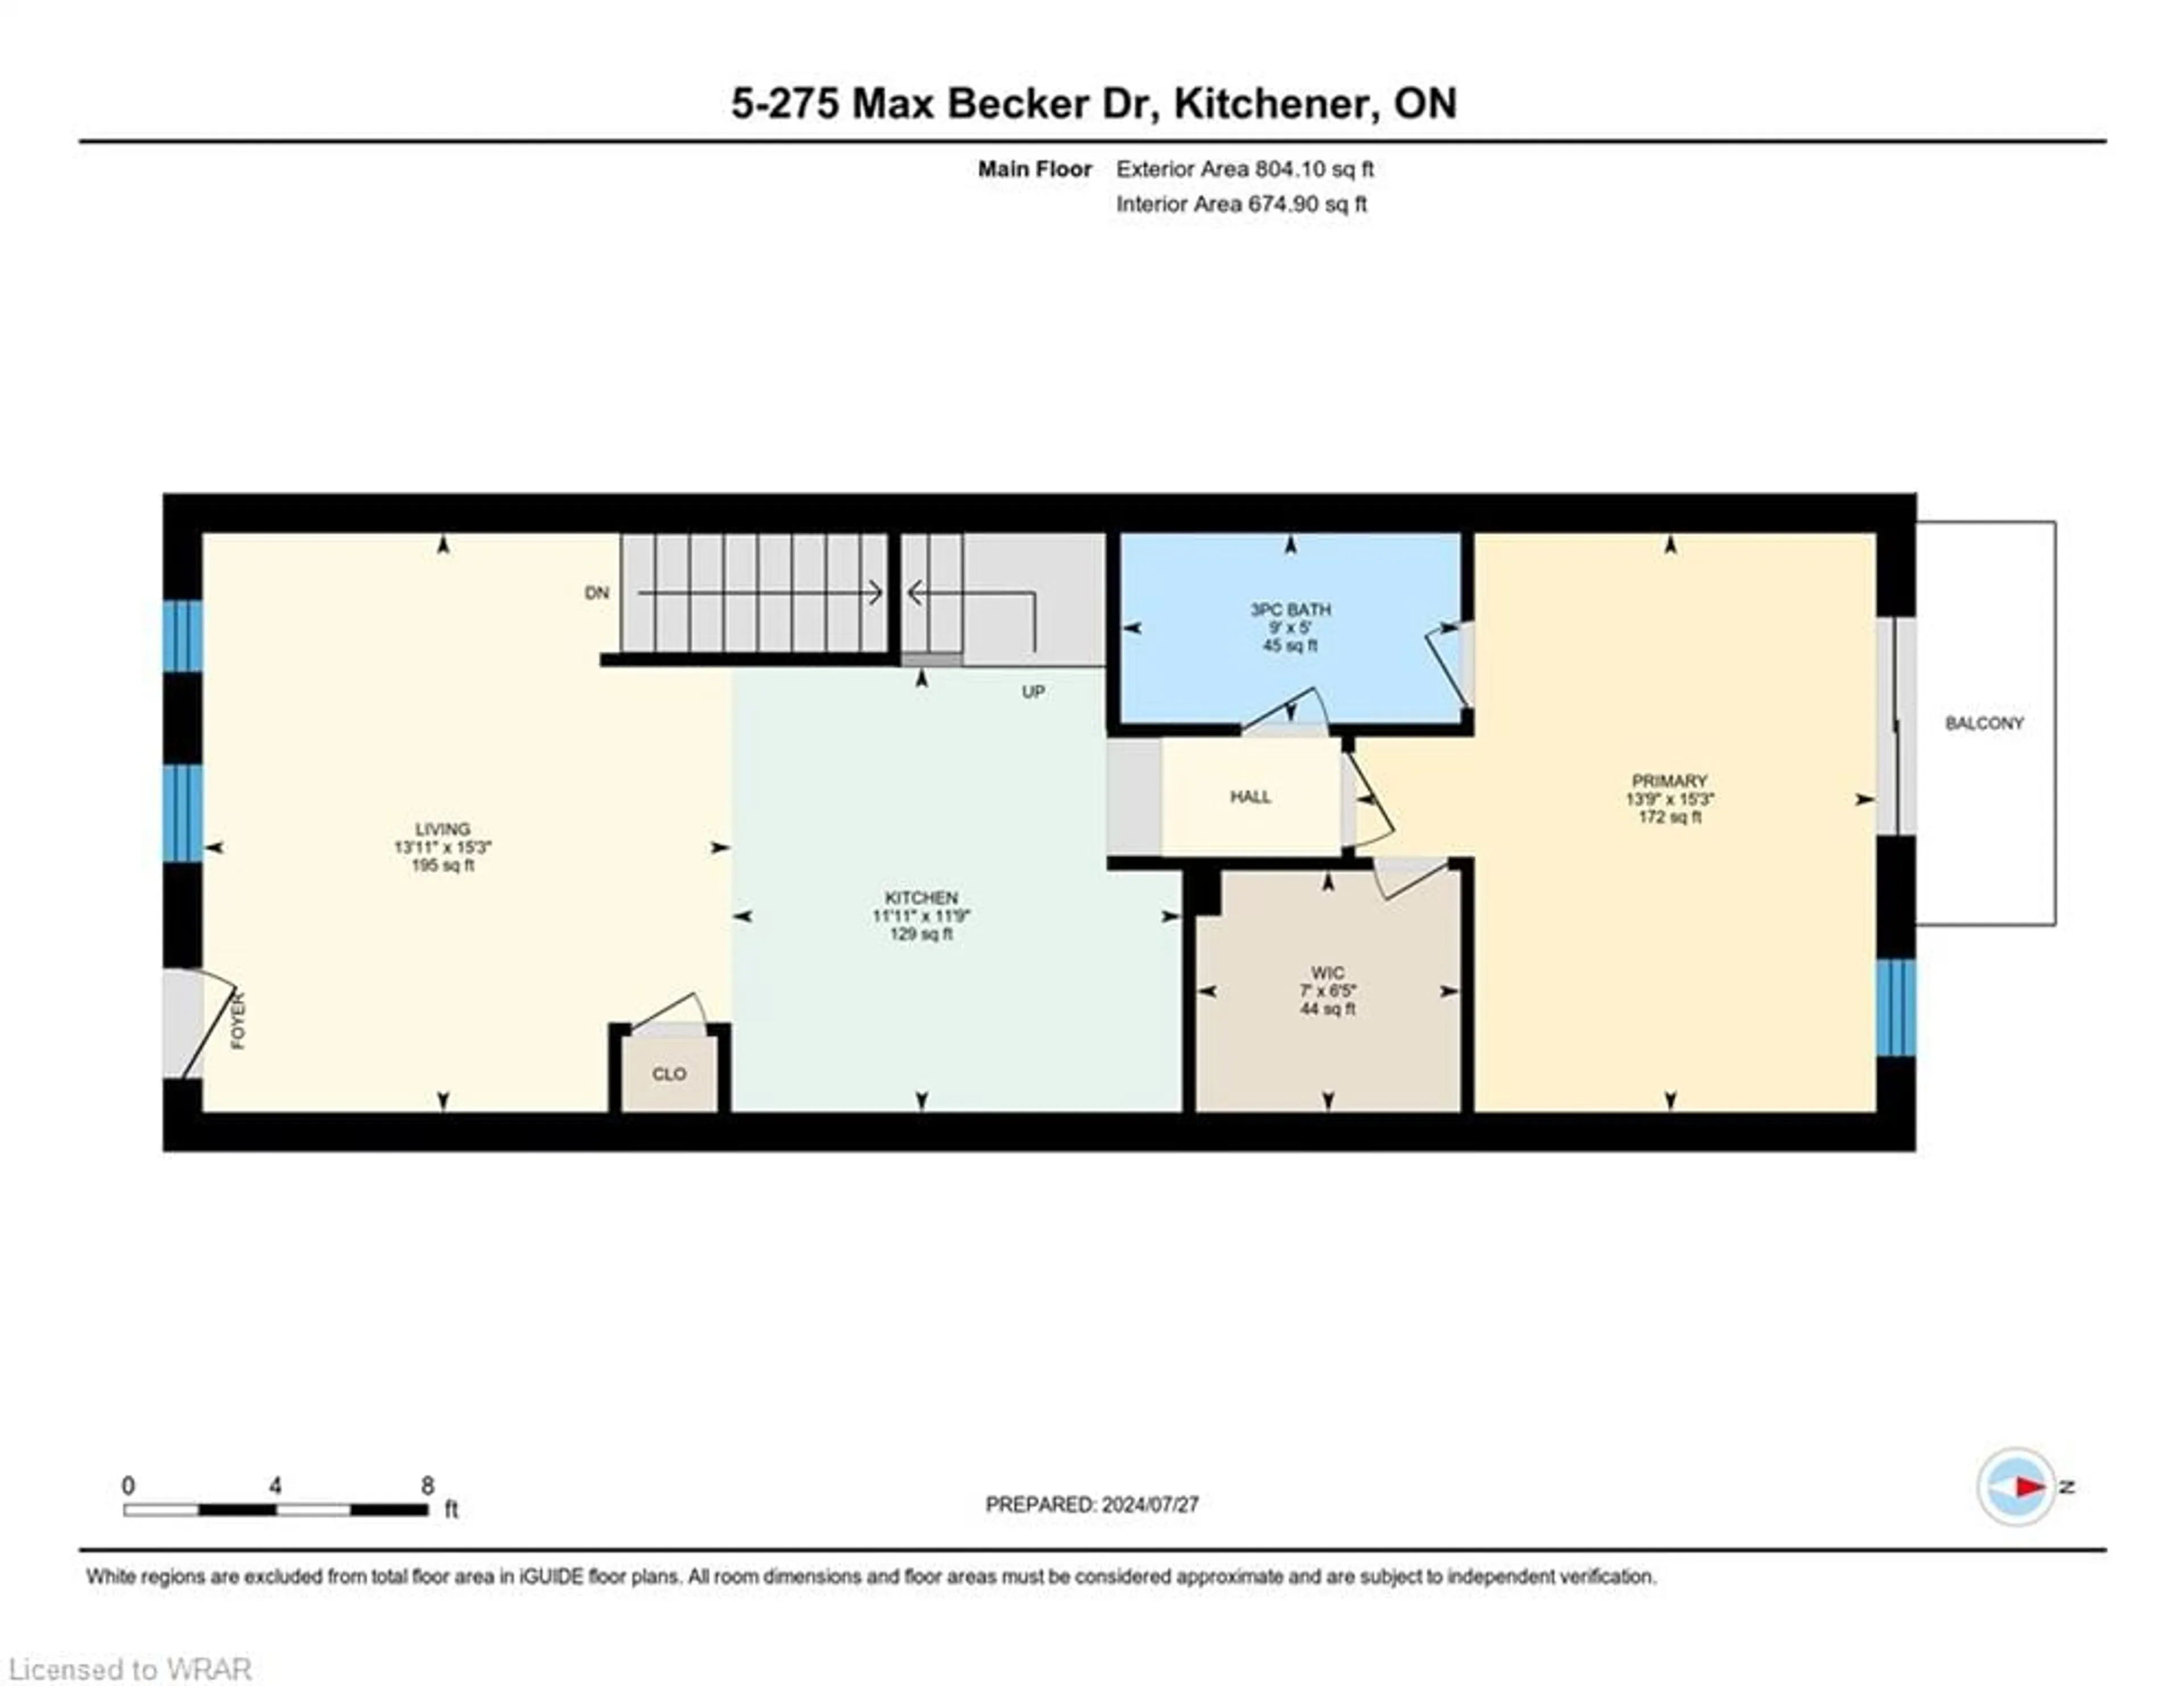 Floor plan for 275 Max Becker St #5, Kitchener Ontario N2B 1X8